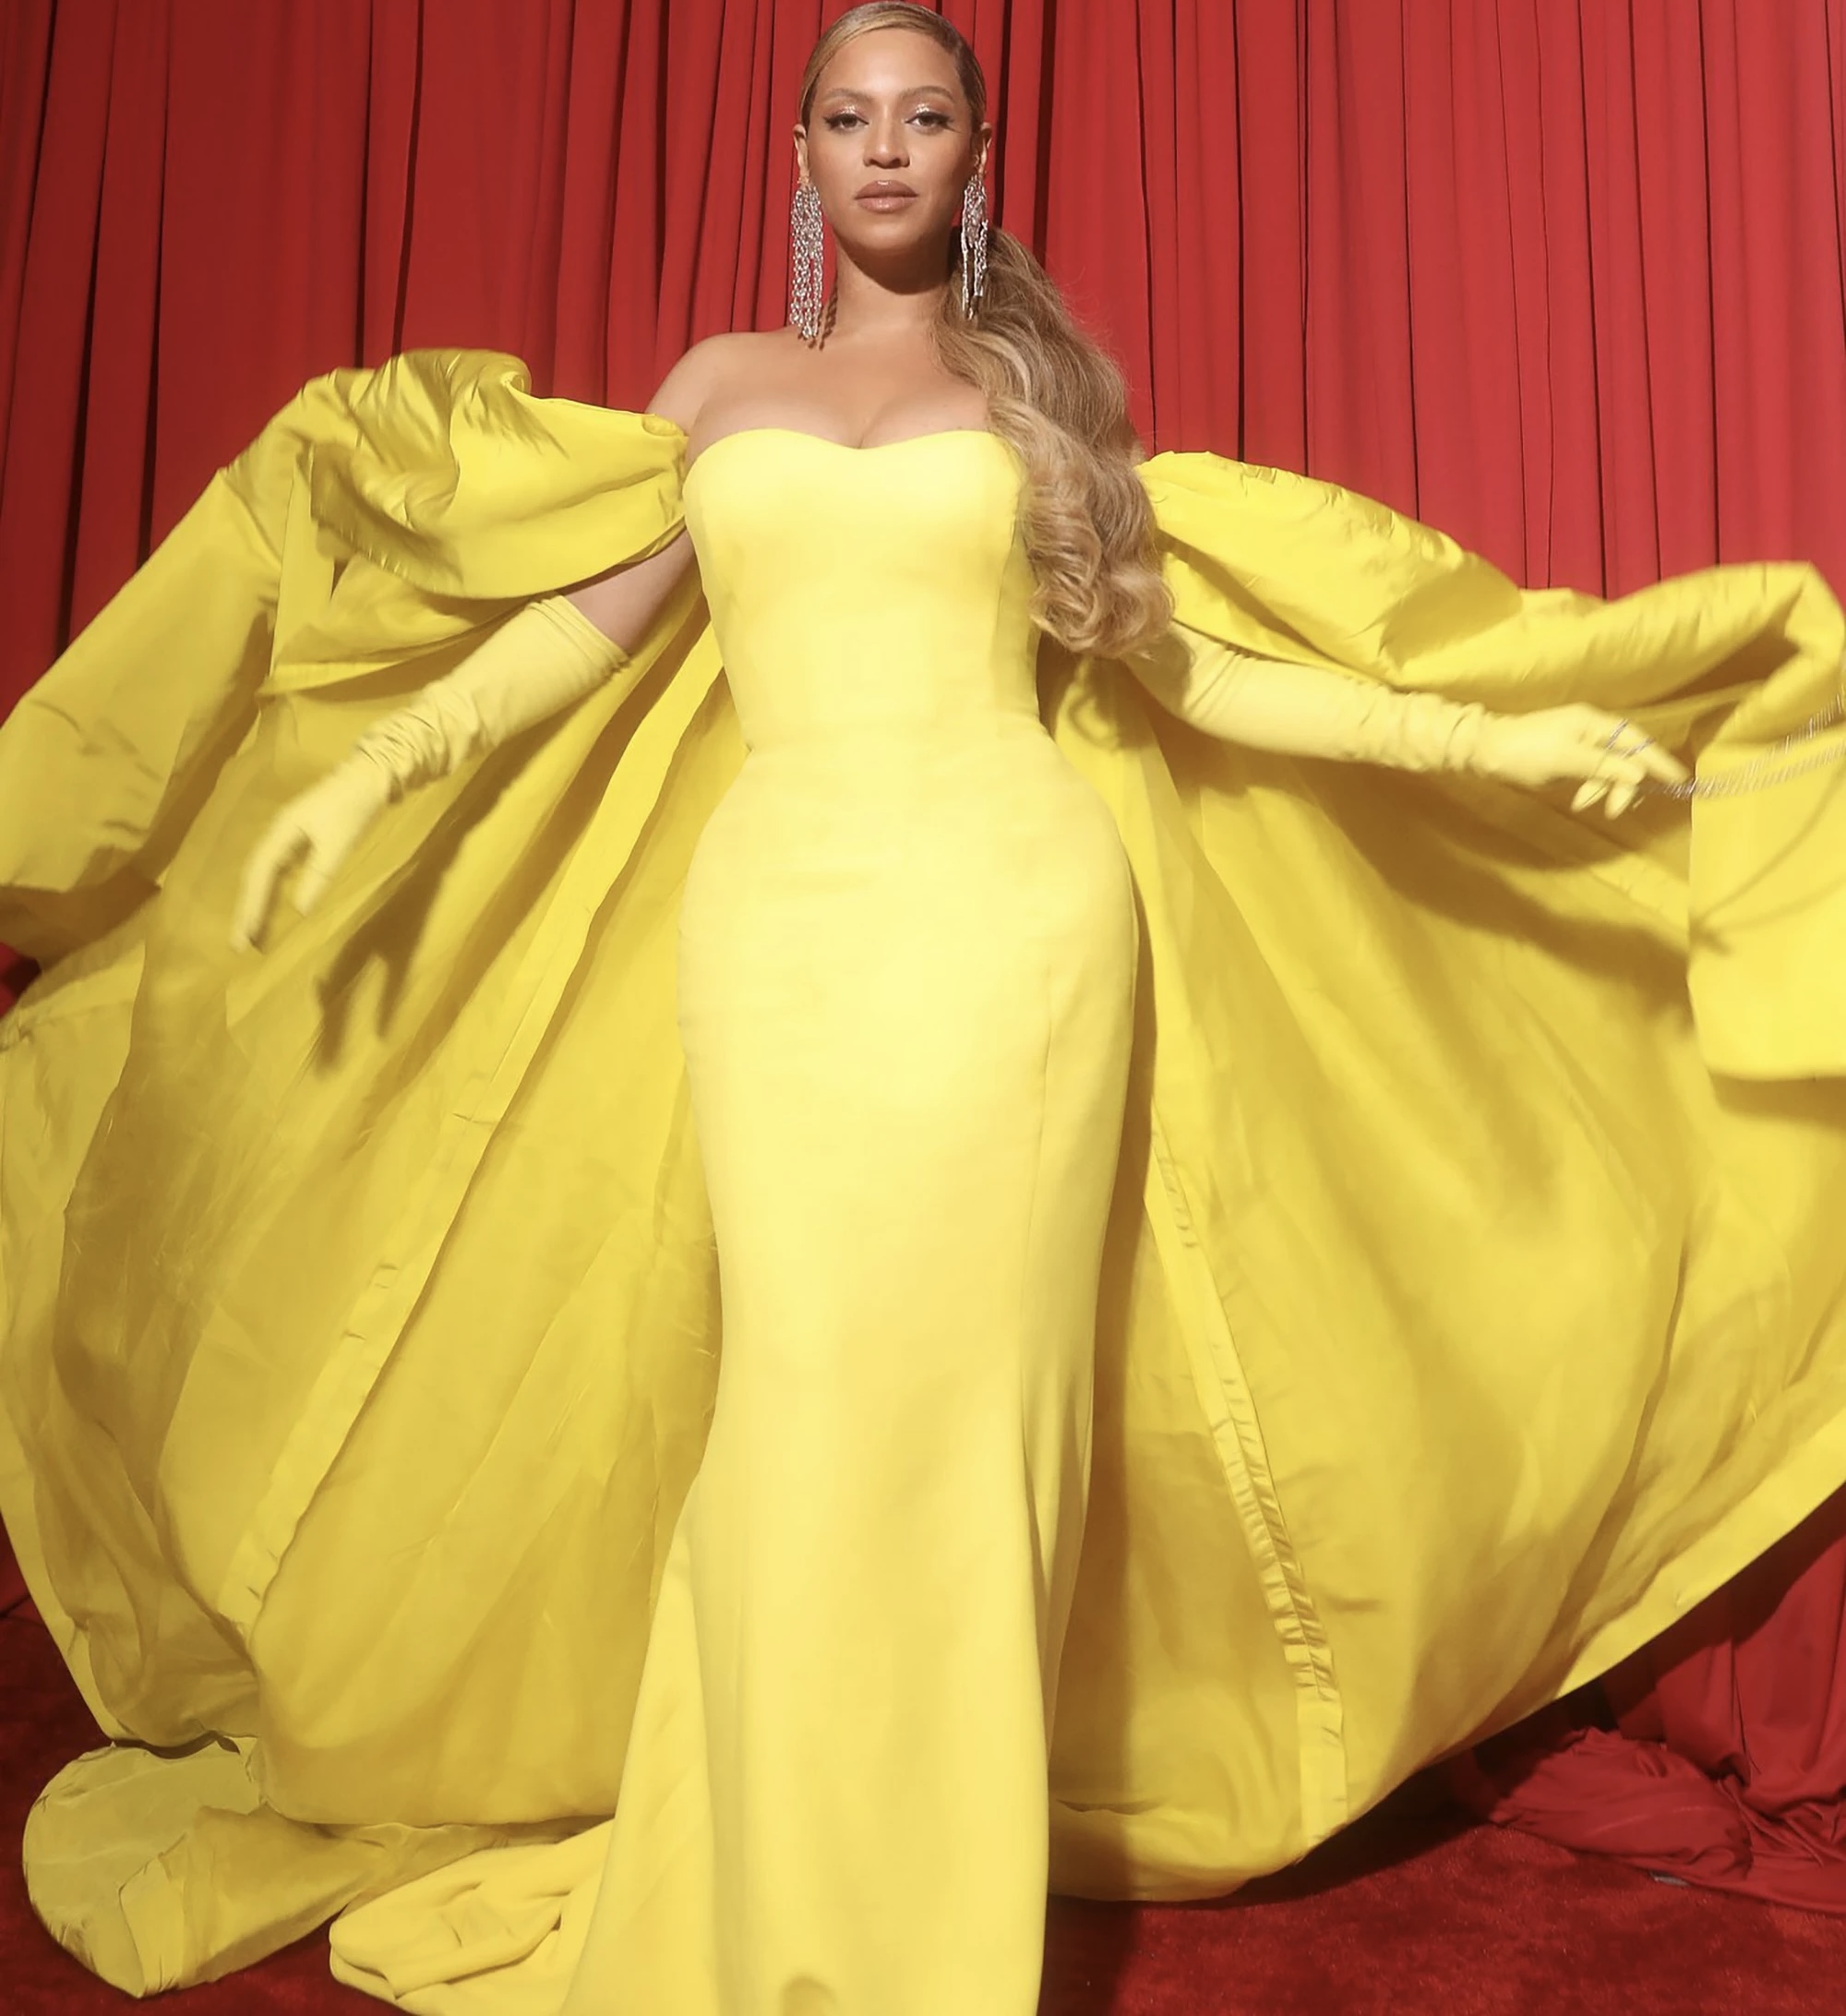 Beyoncé | Beyoncé Wiki | FANDOM powered by Wikia